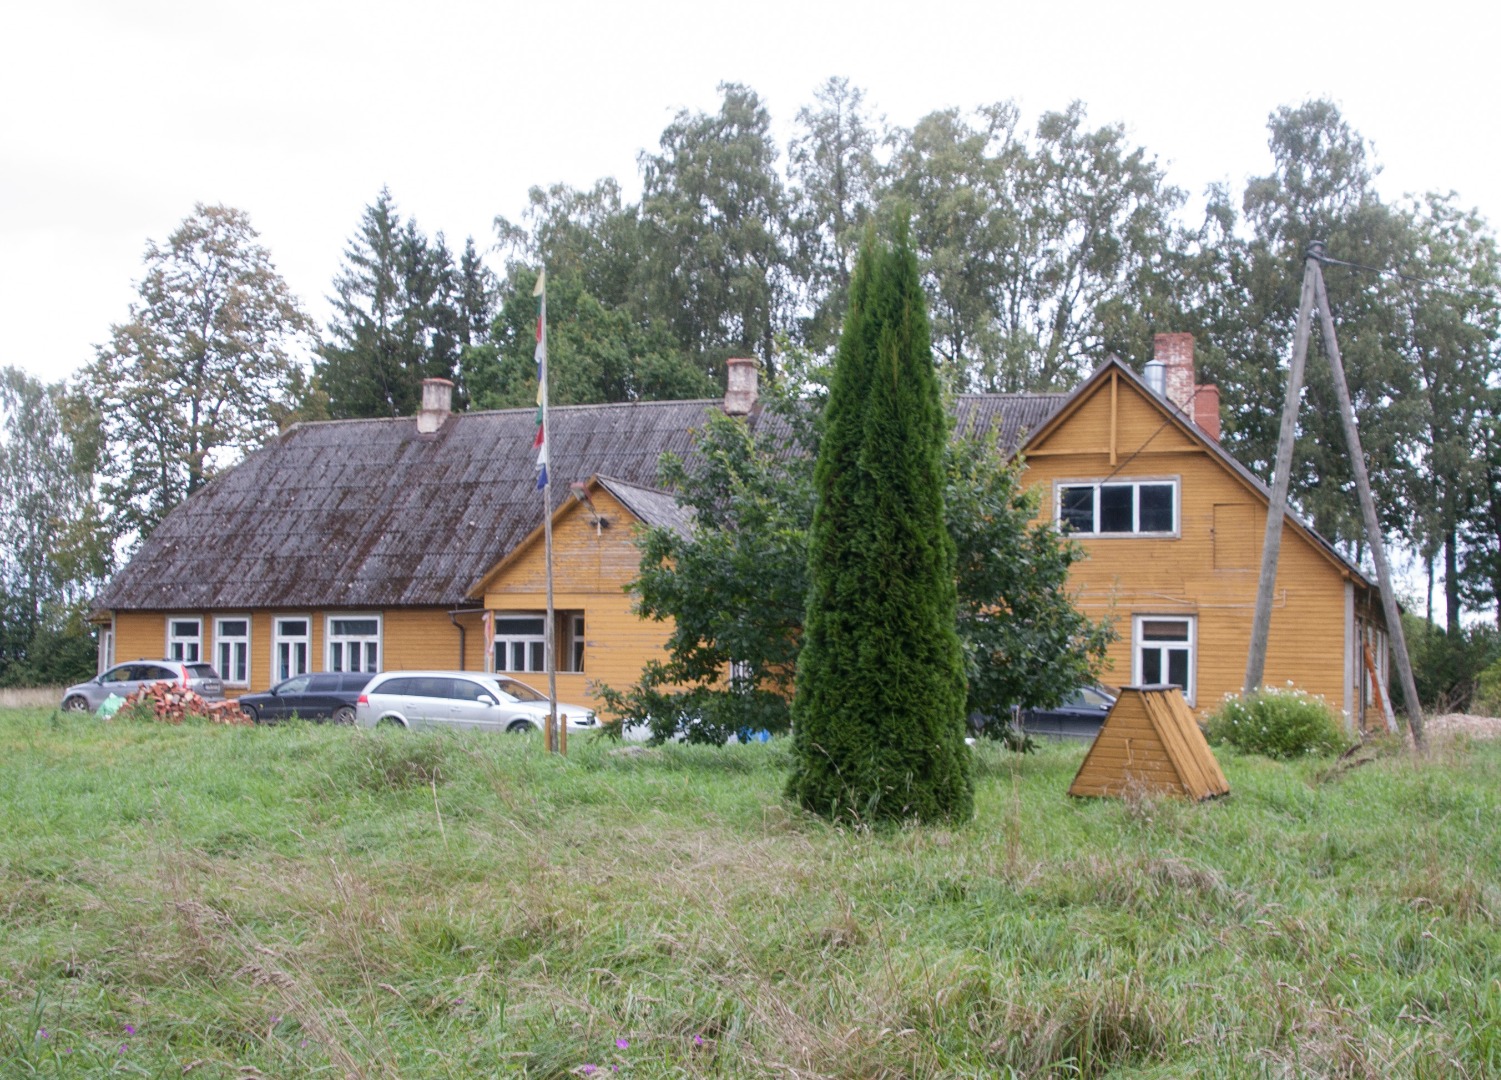 Viljandi County Outdoor School building rephoto